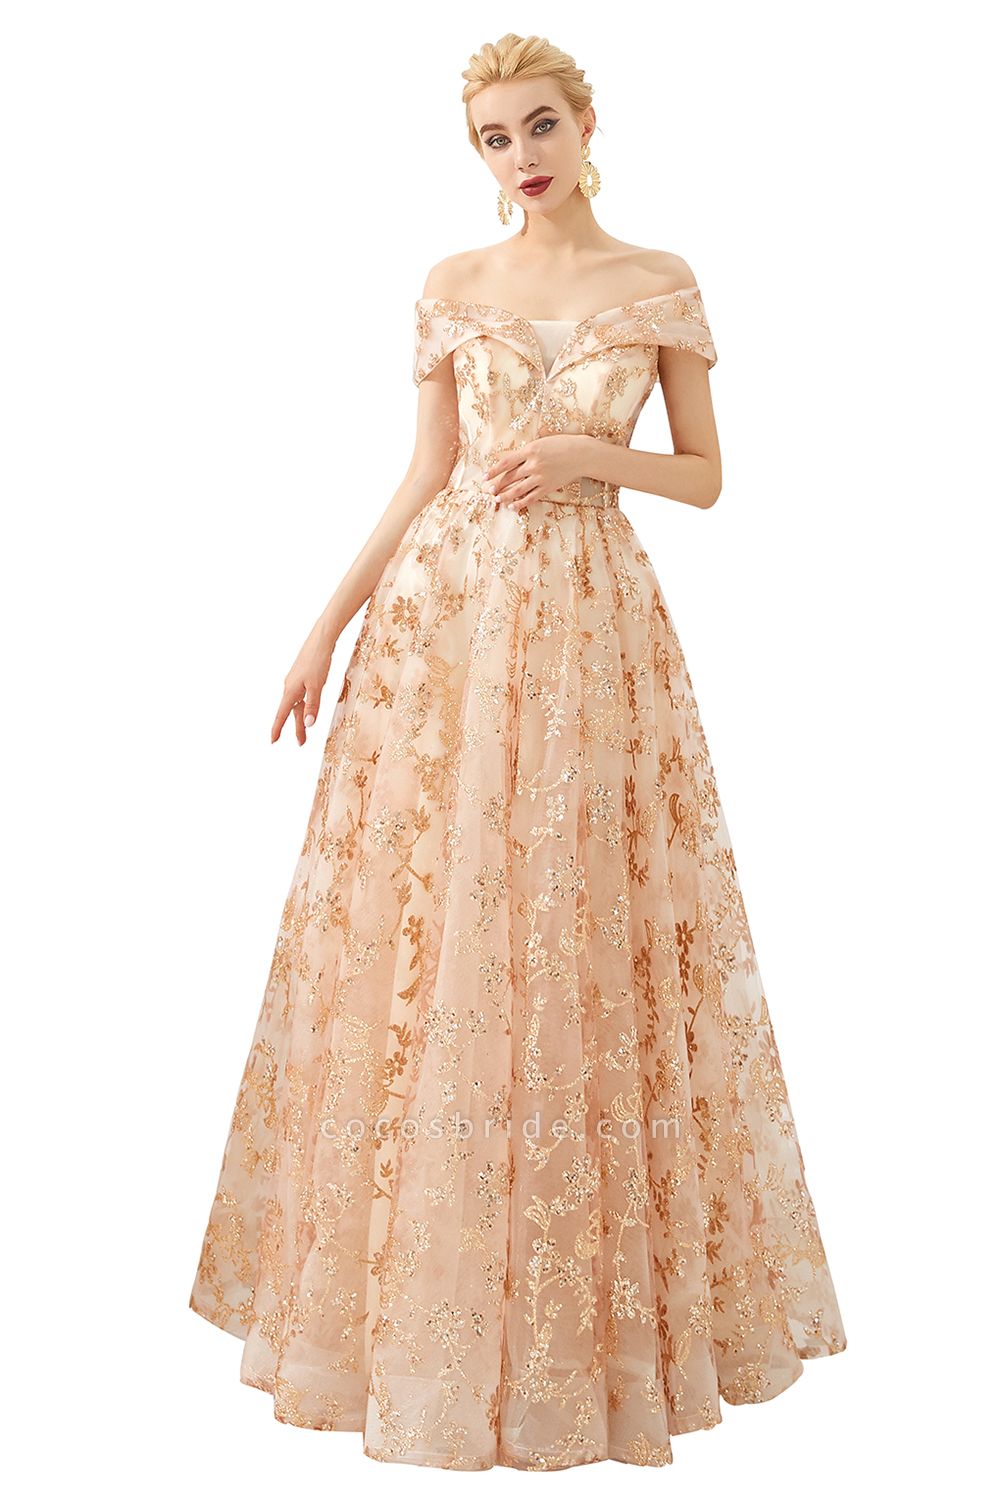 Graceful Off-the-shoulder Tulle A-line Prom Dress